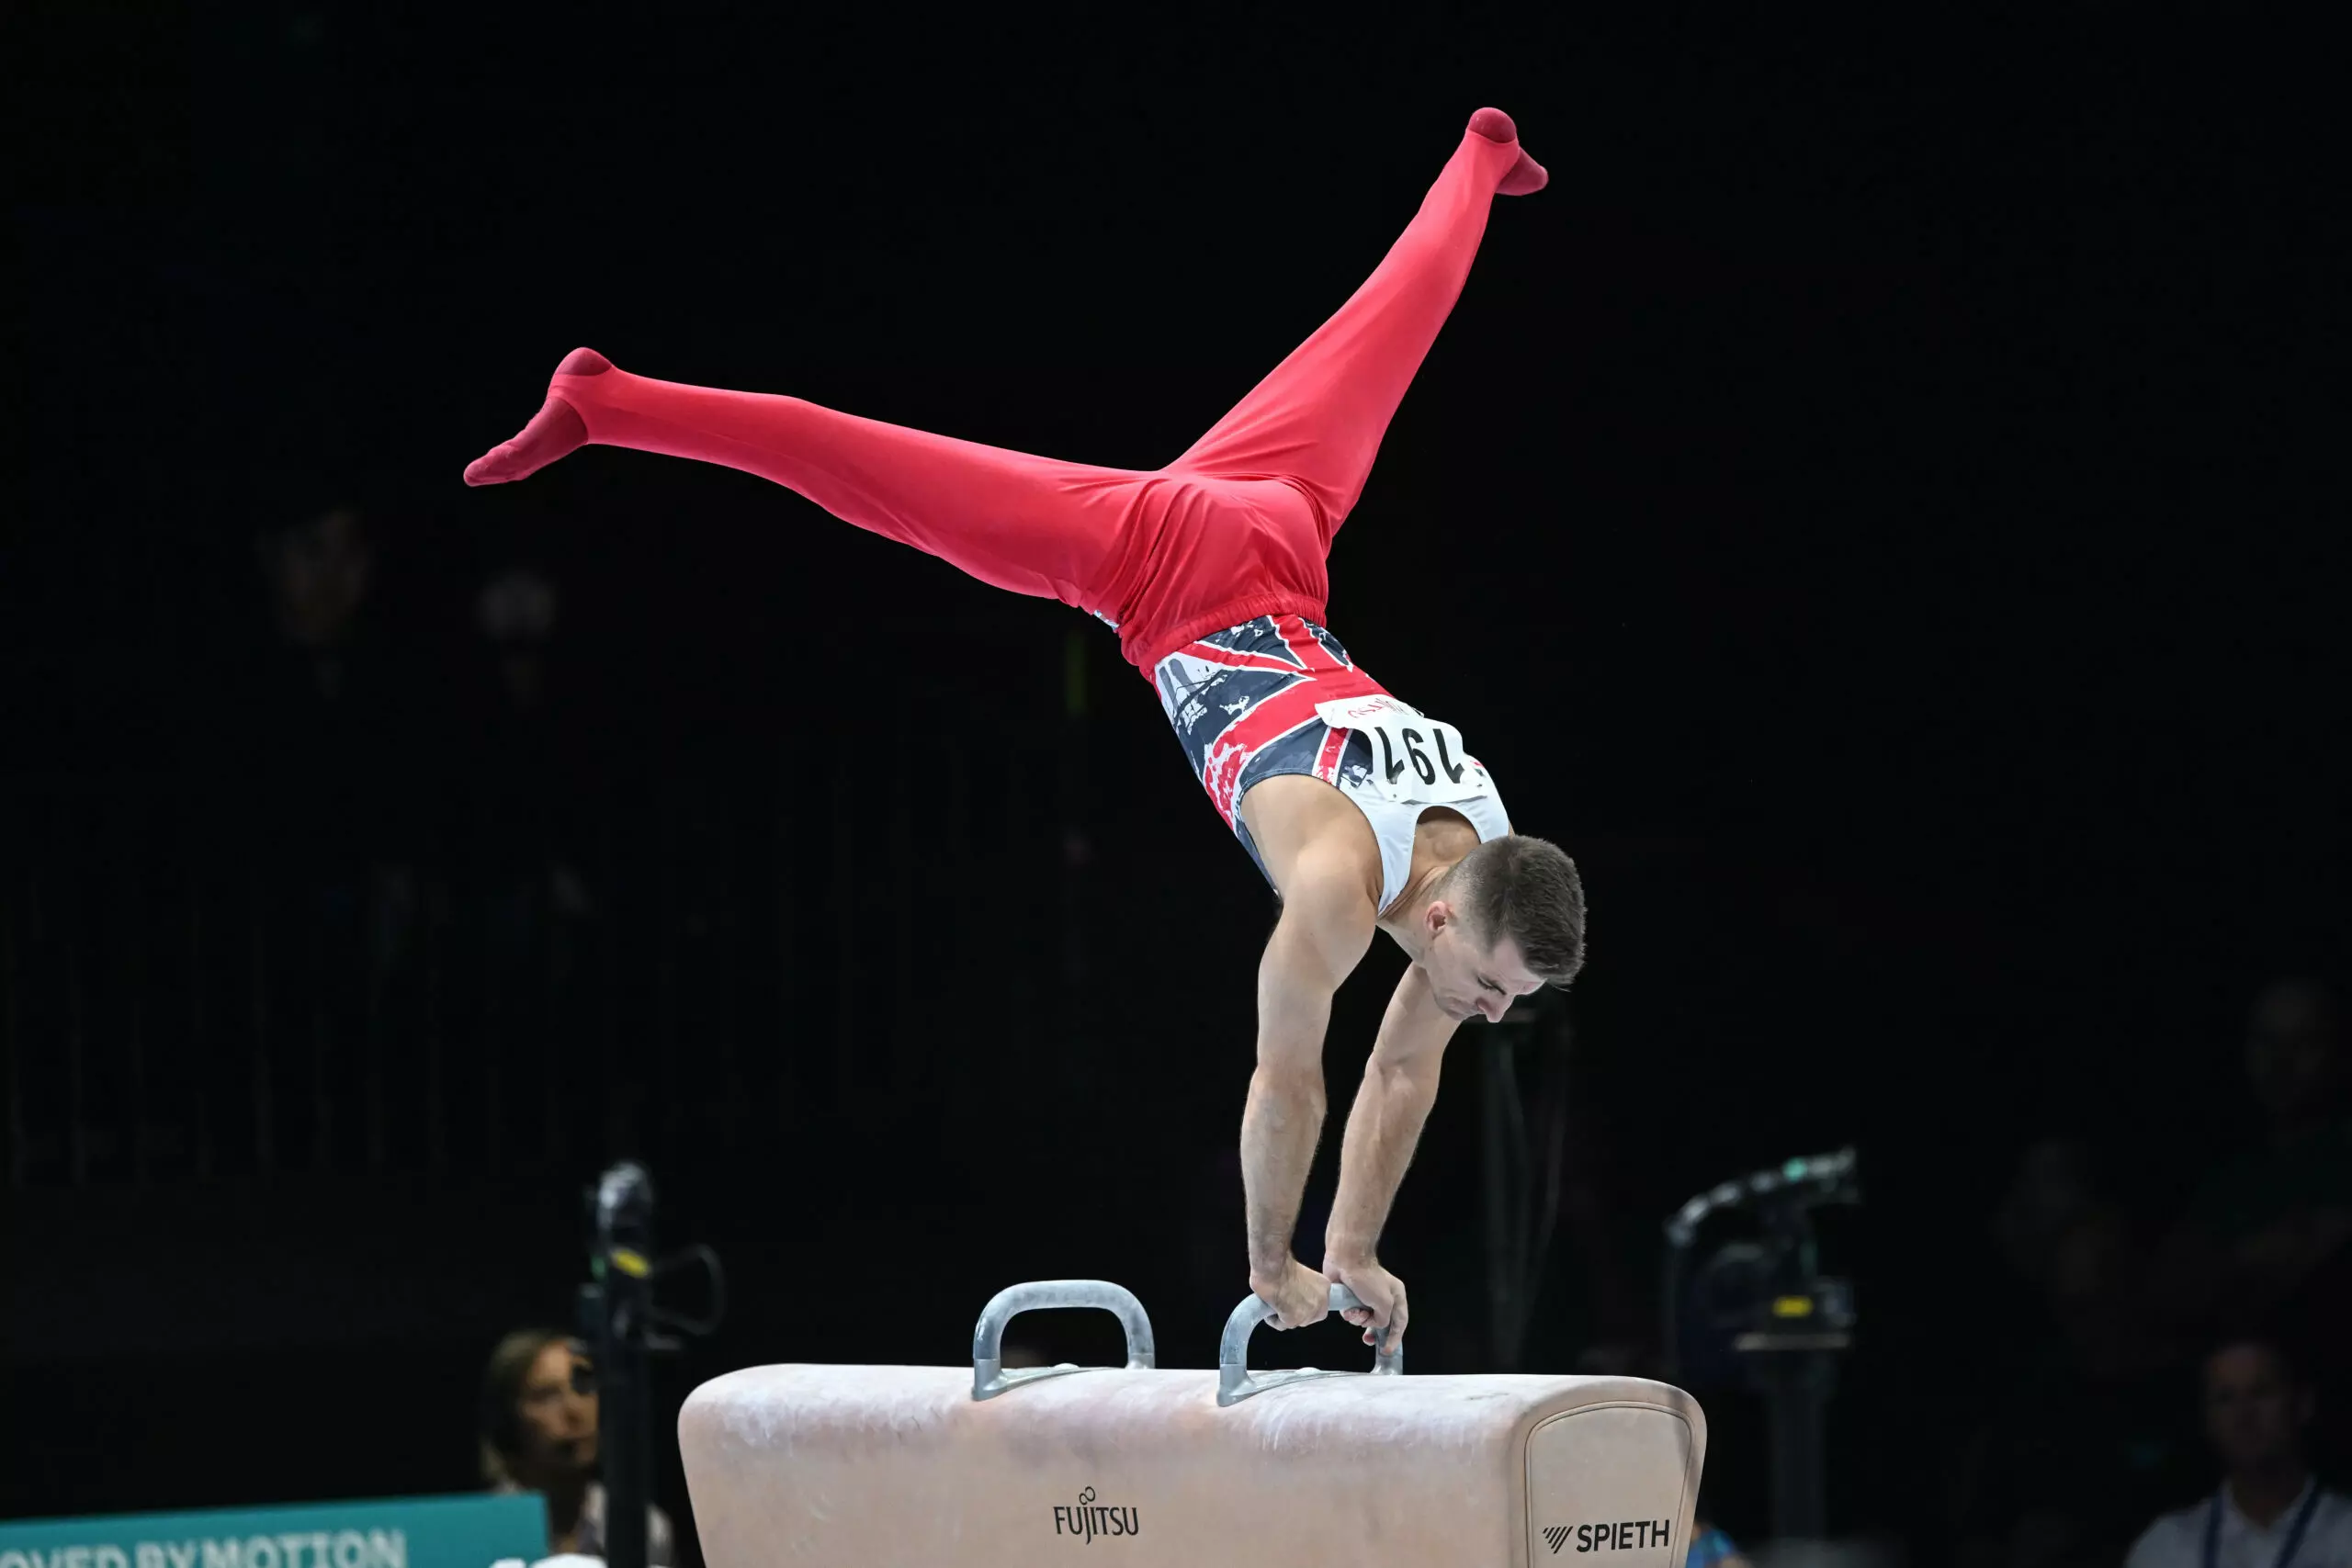 World Artistic Gymnastics Championships 2023